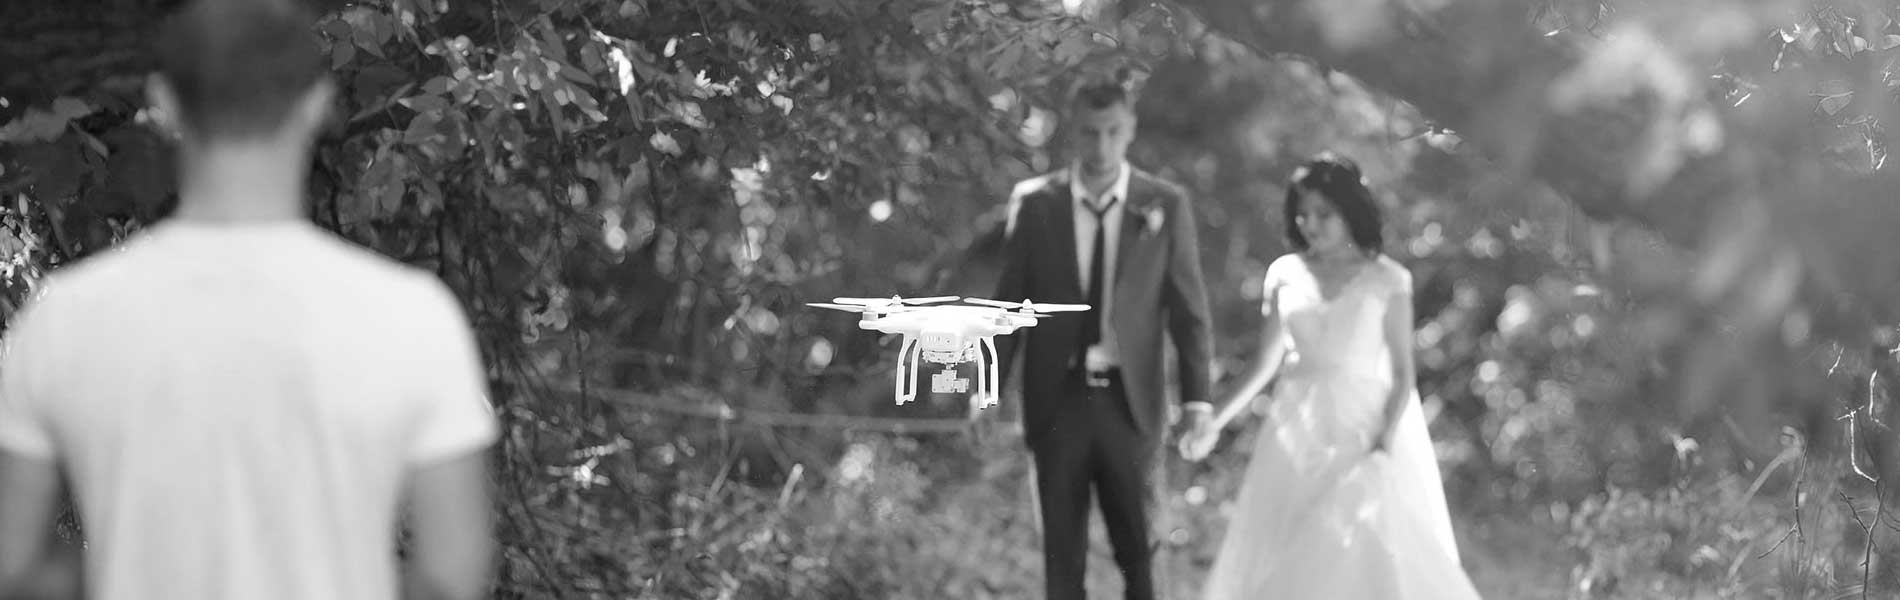 Drone mariage prix